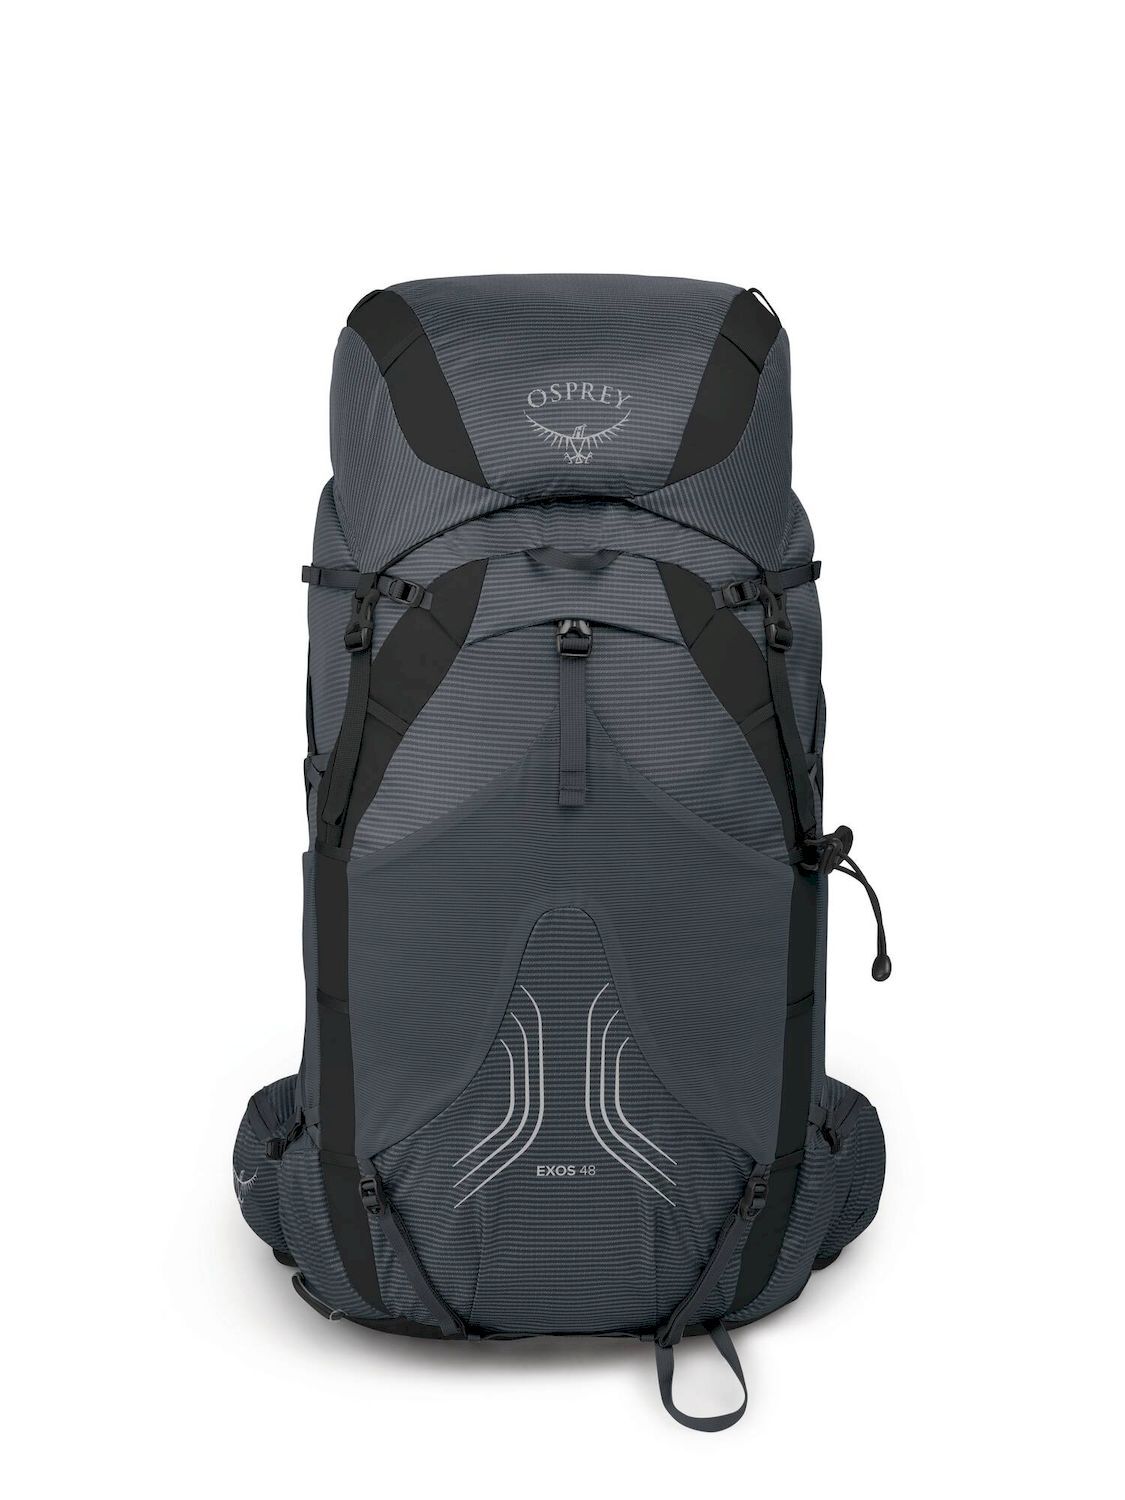 Osprey Exos 48 - Plecak trekkingowy meski | Hardloop